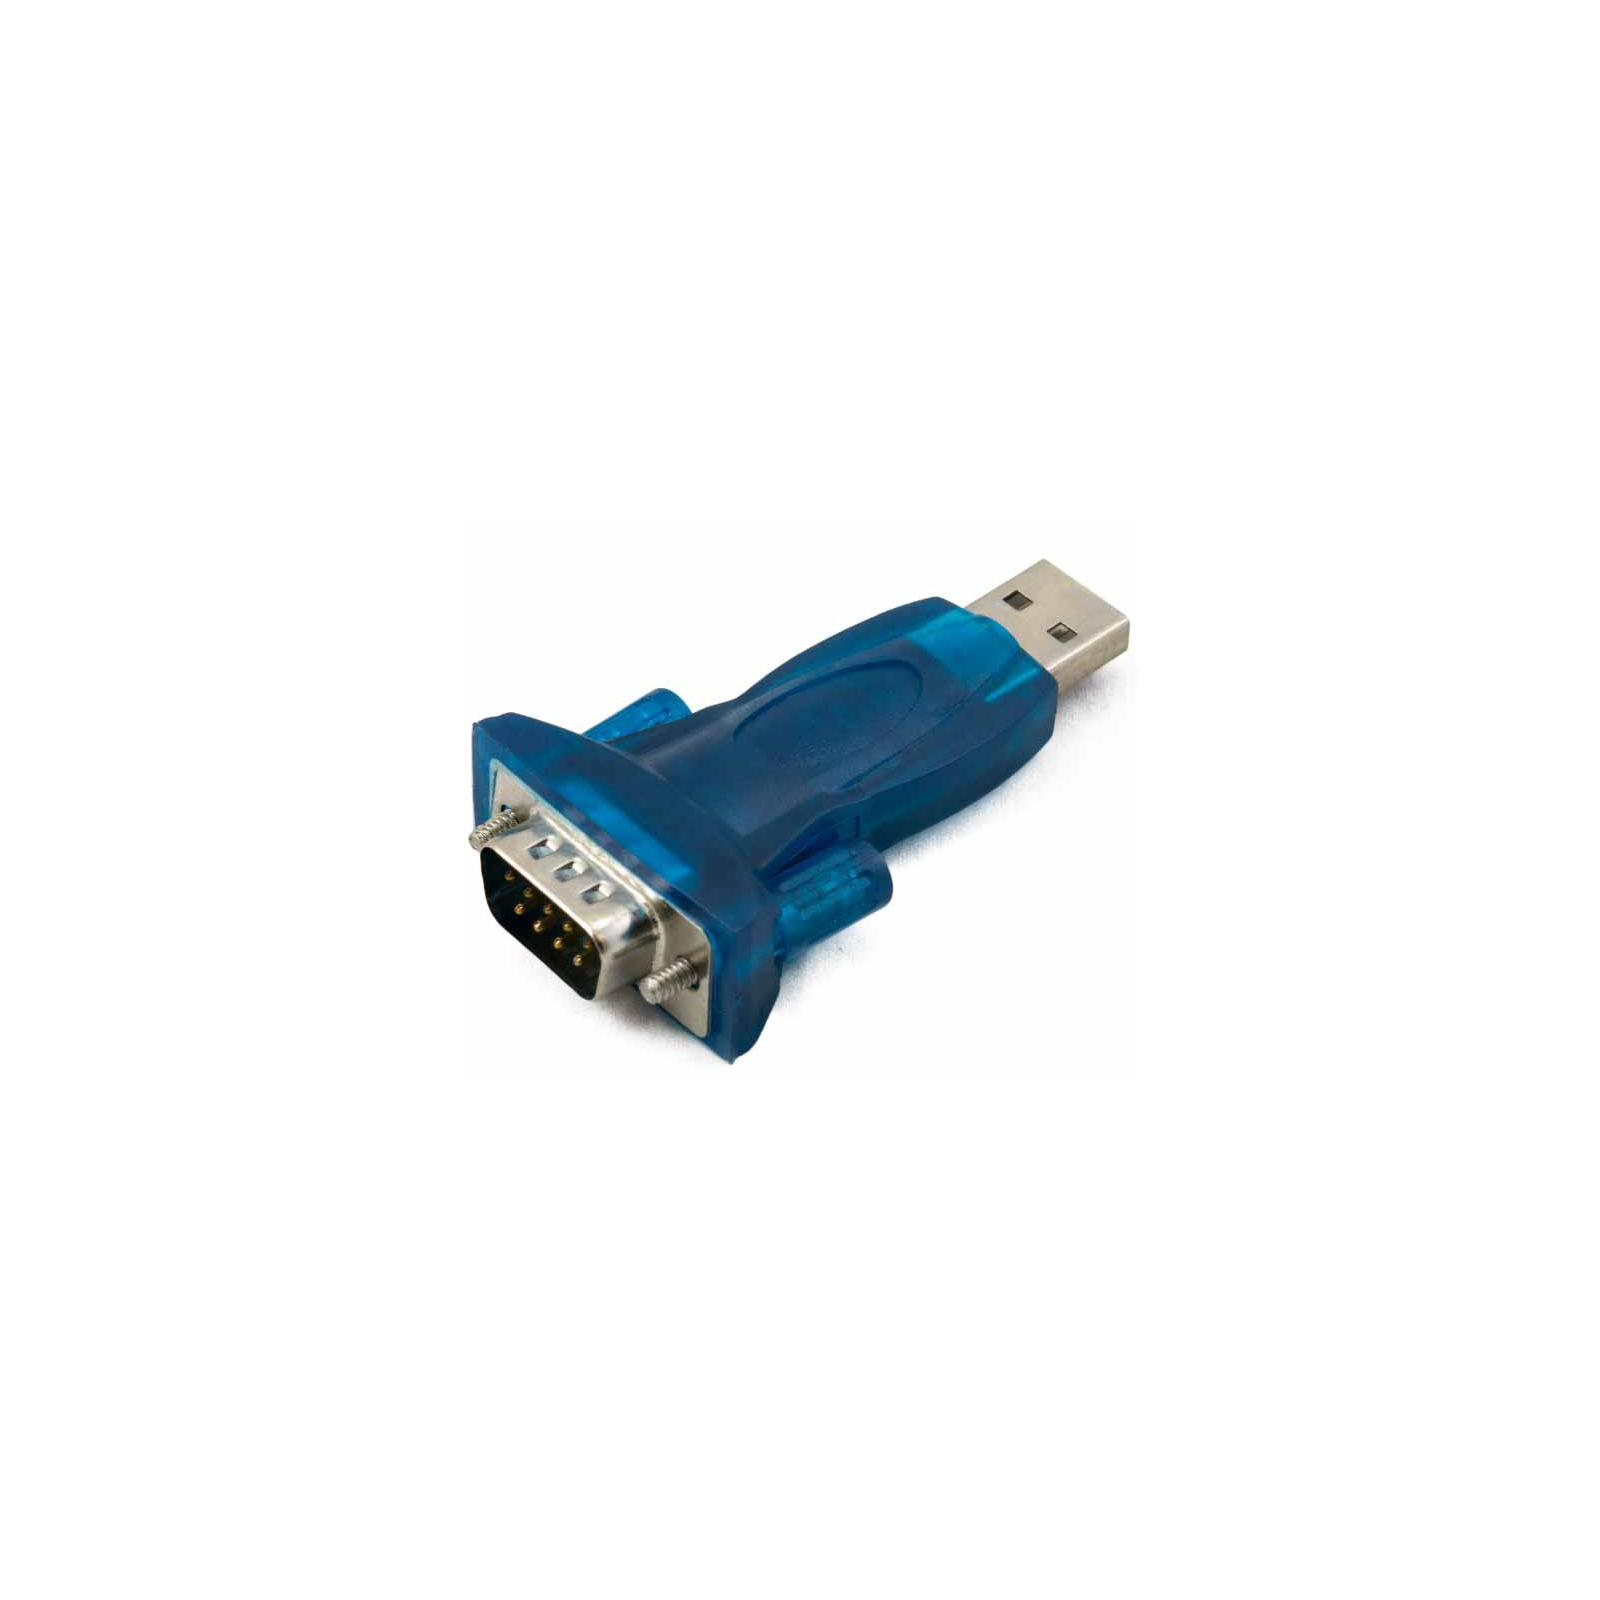 Переходник USB to COM Extradigital (KBU1654)